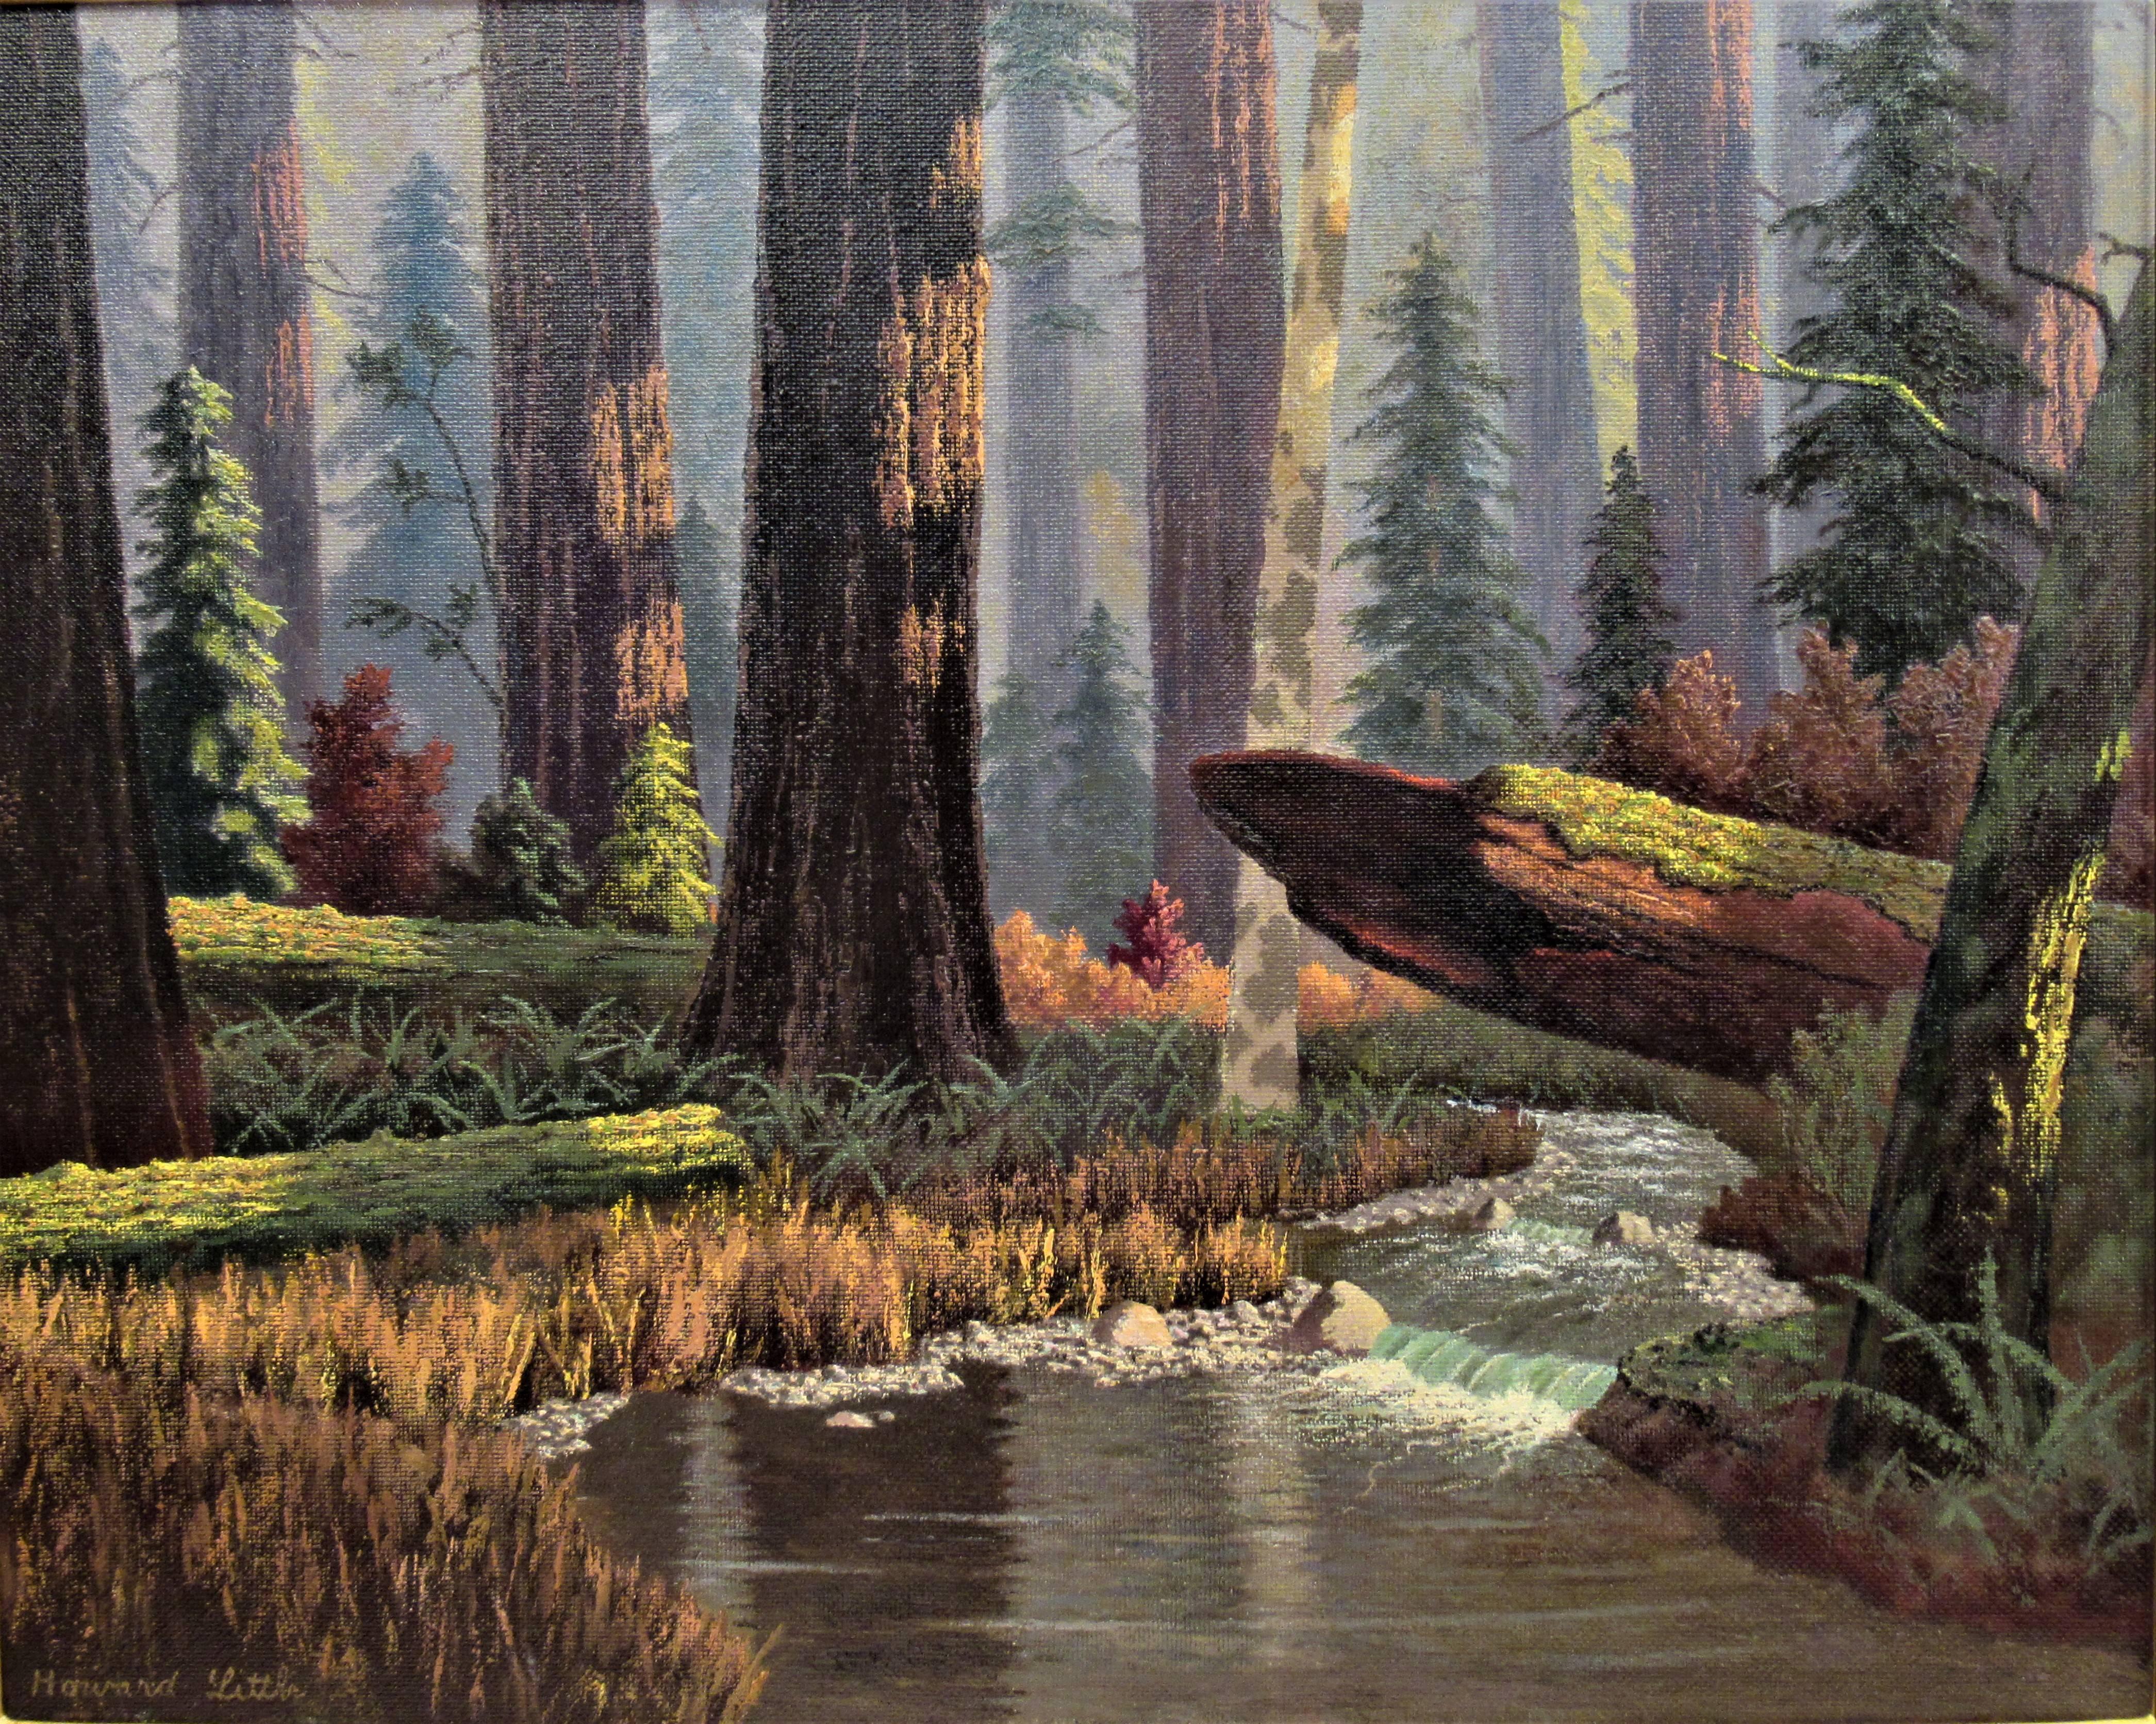 Redwood Forest, California - Painting by Howard John Little